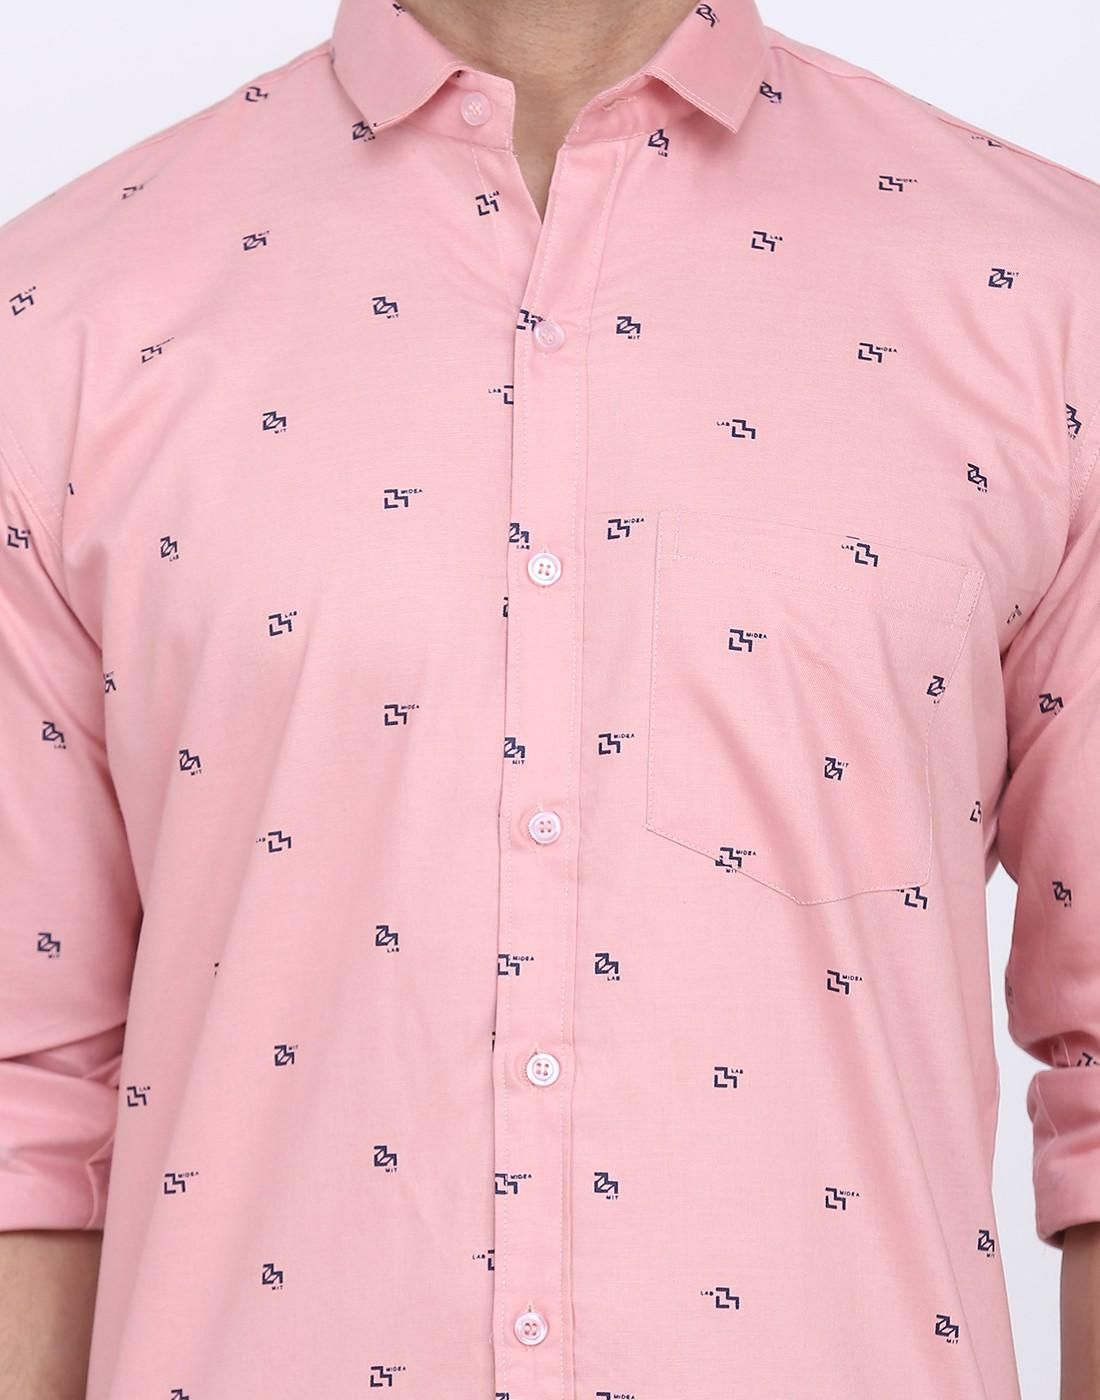 Cotton Blend Printed Full Sleeves Regular Fit Men's Casual Shirt